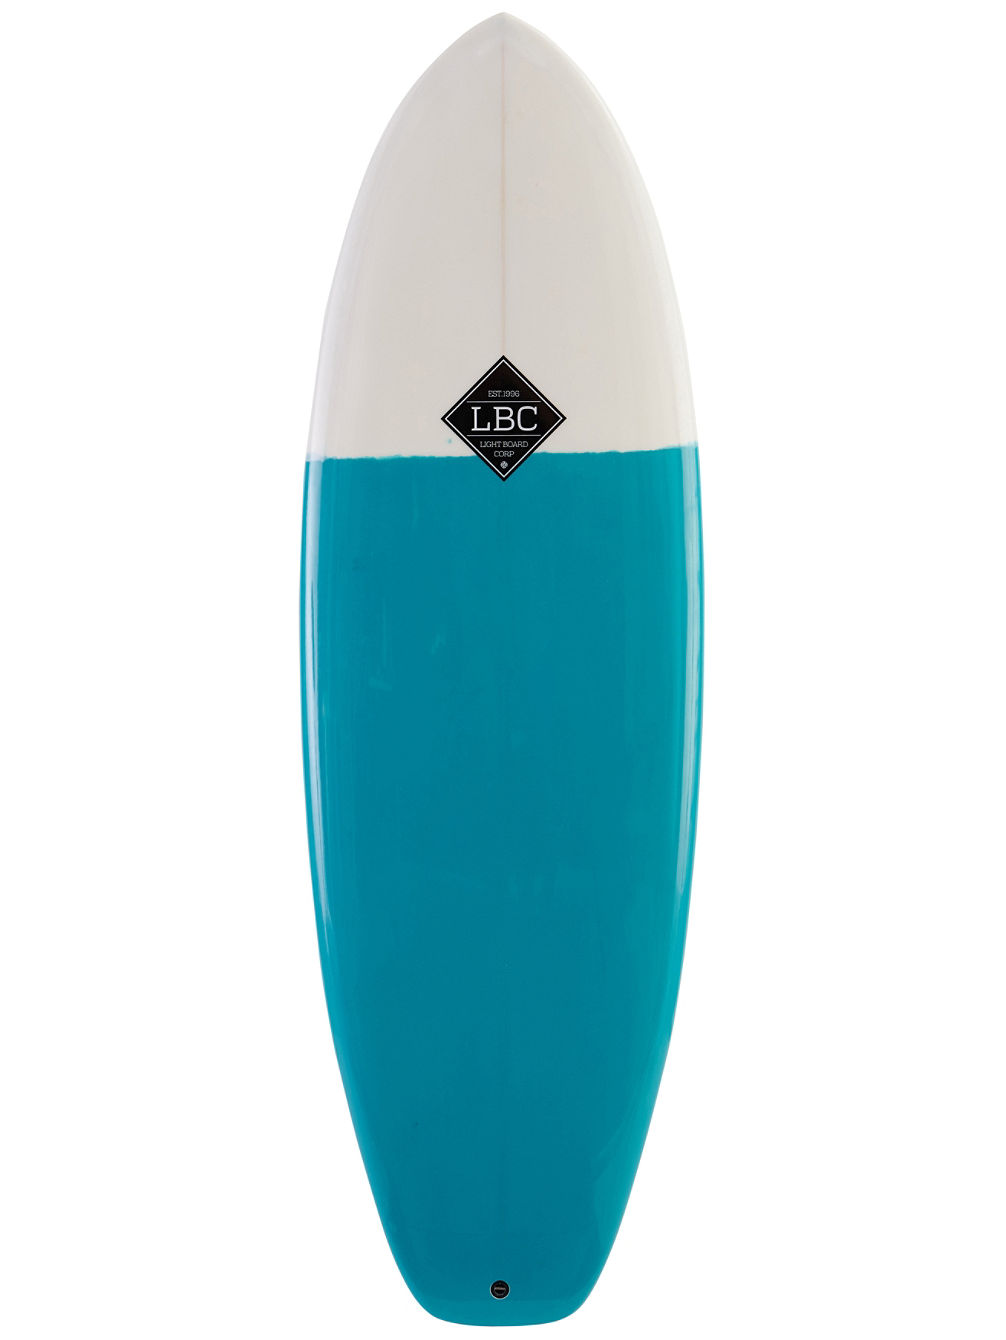 Bomb Resin Tint White/Blue 6&amp;#039;0 Deska za surfanje